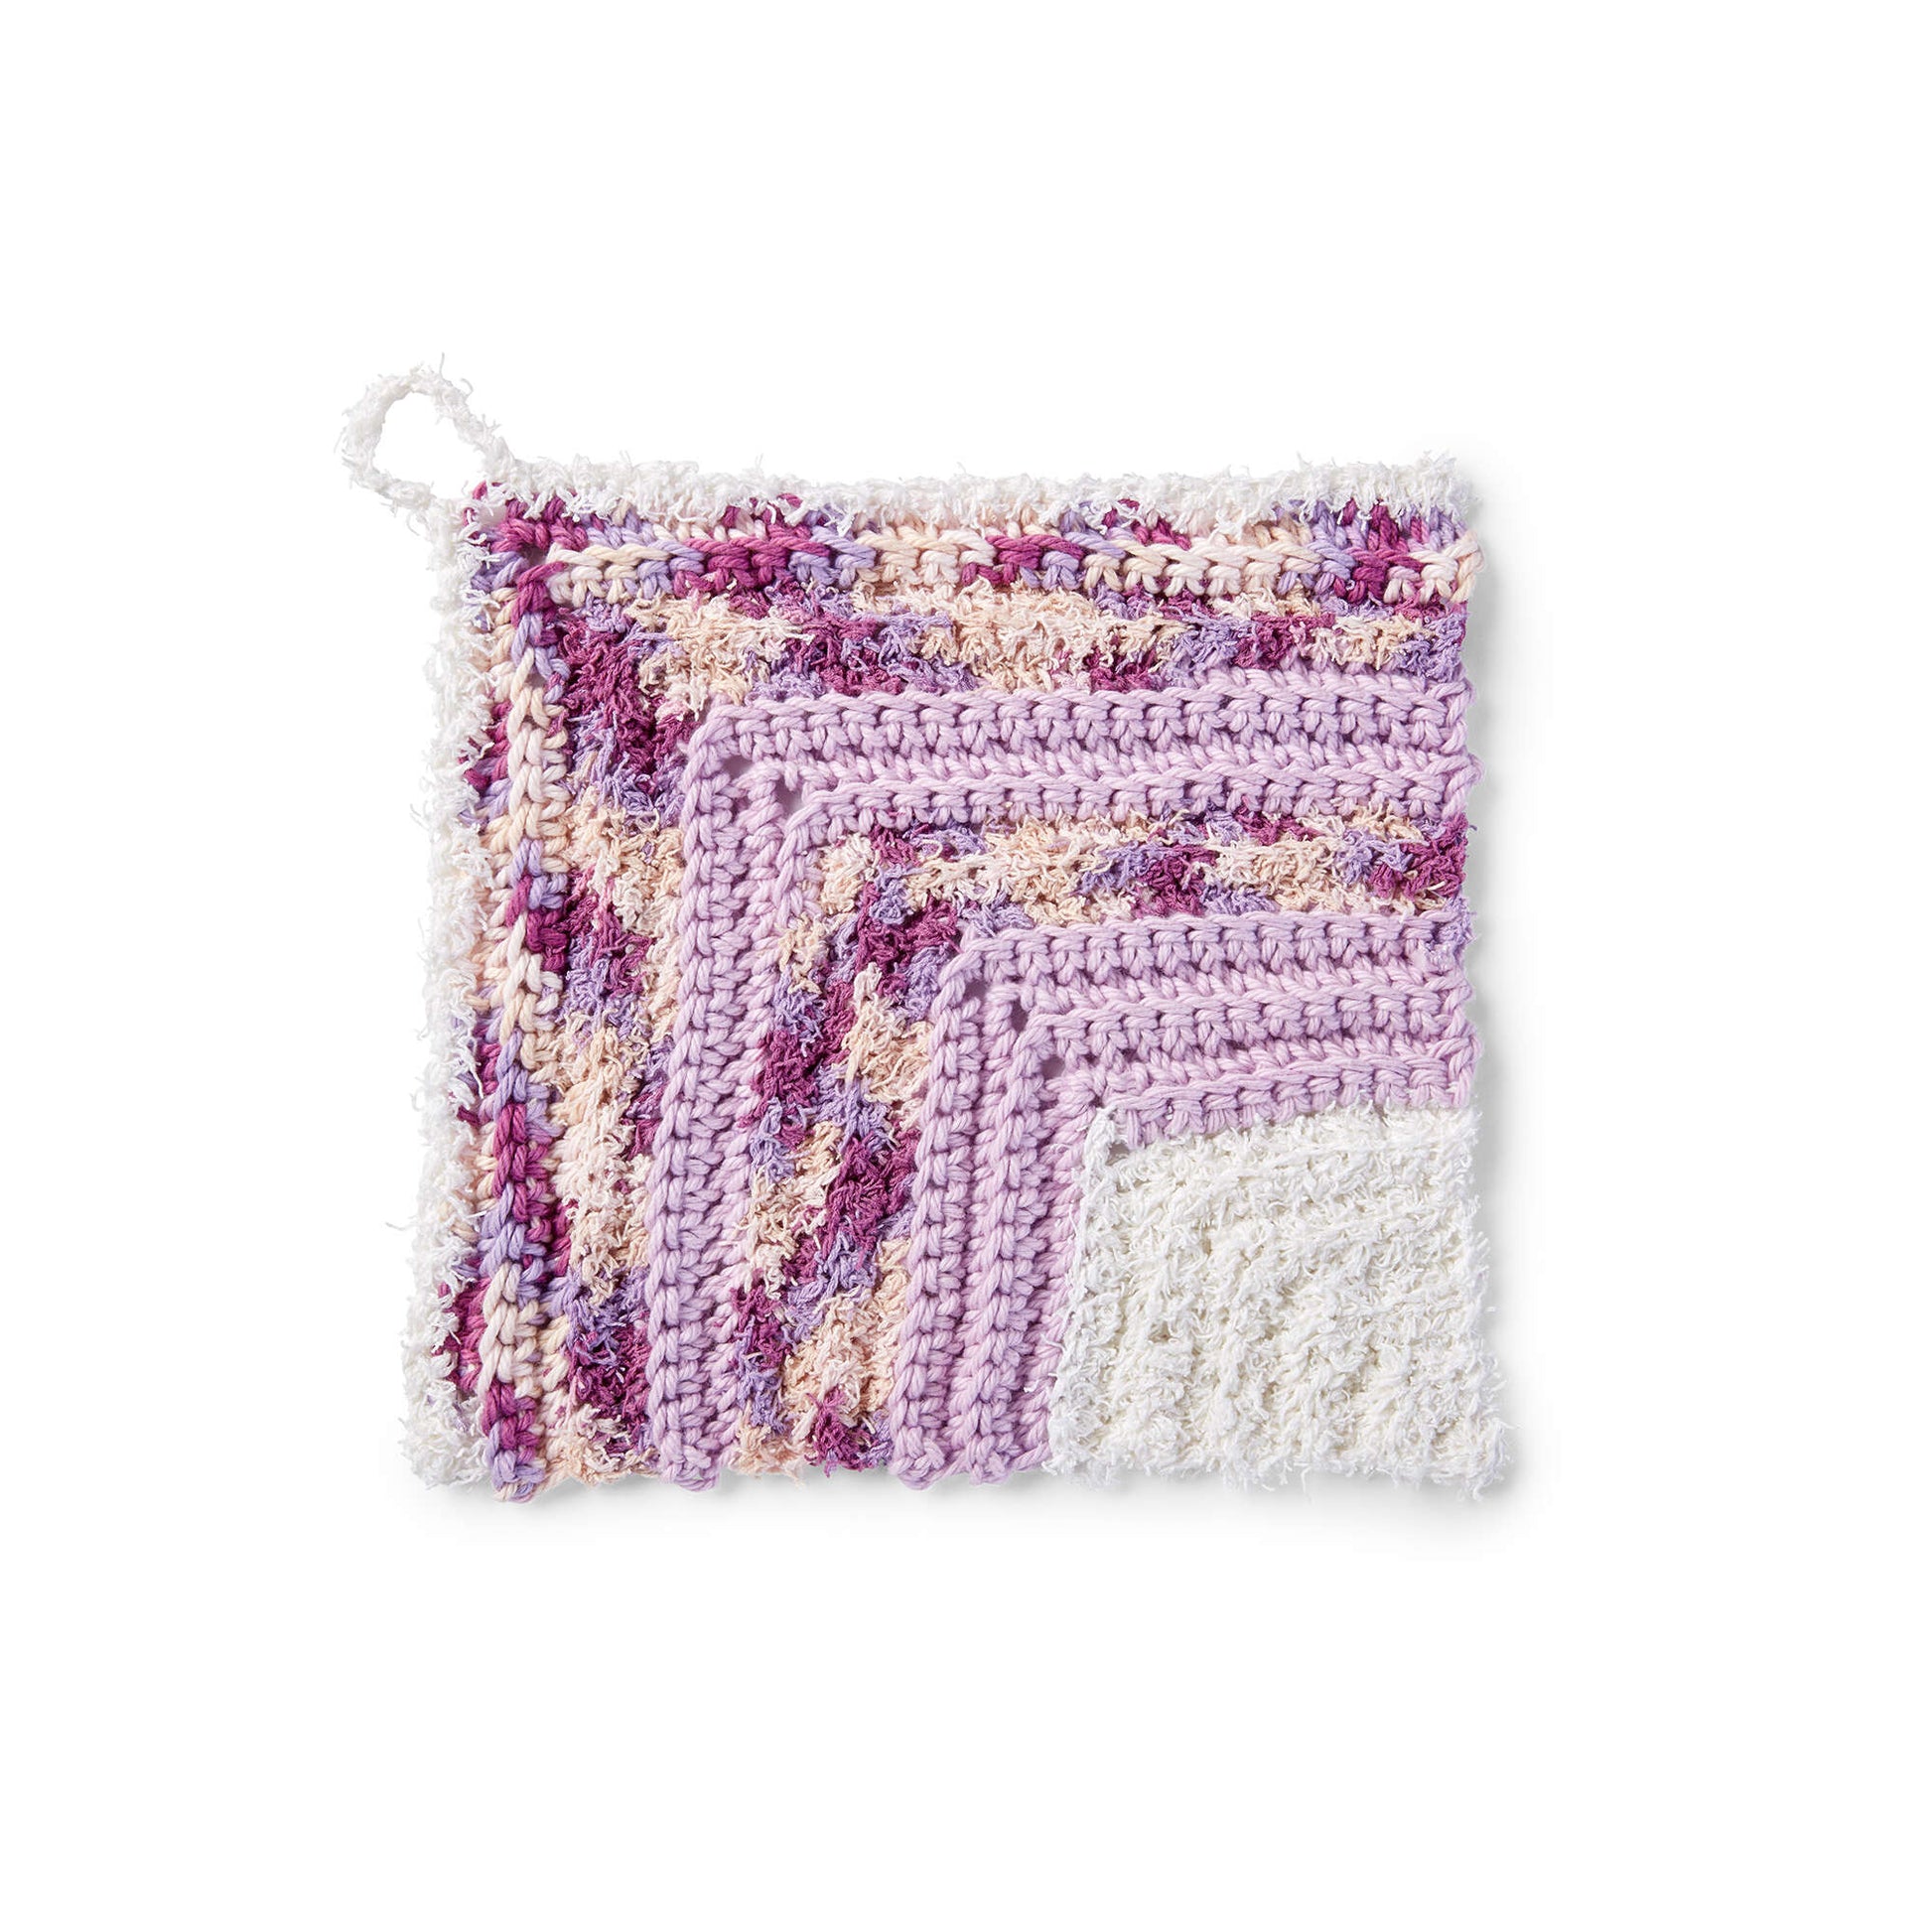 Free Lily Sugar'n Cream Scrubbing Miter Crochet Dishcloth Pattern